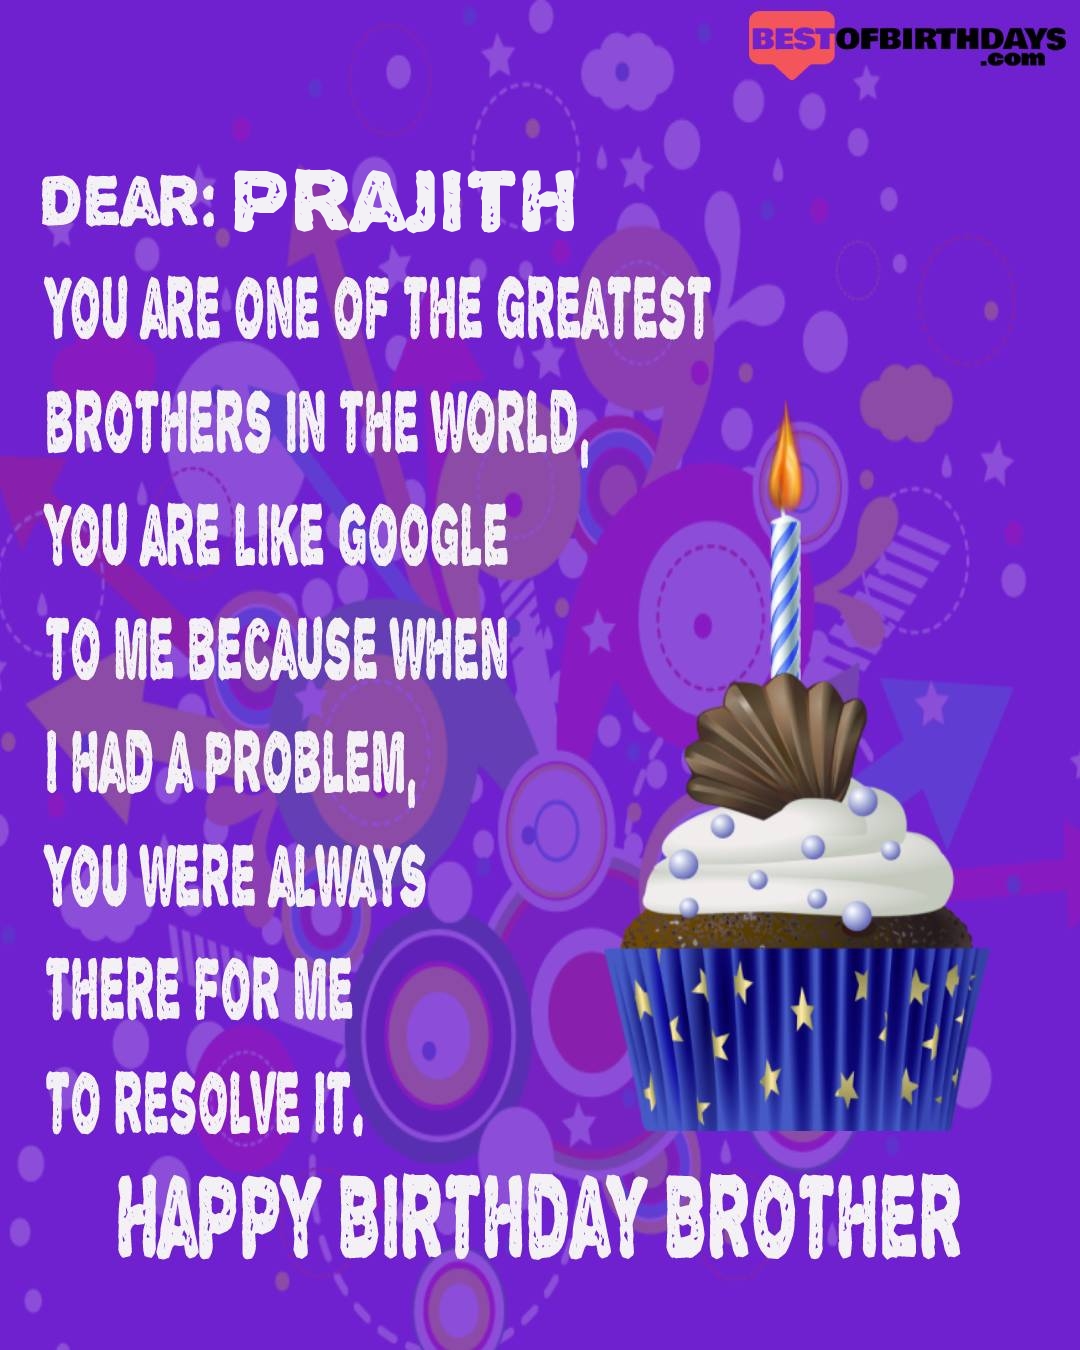 Happy birthday prajith bhai brother bro